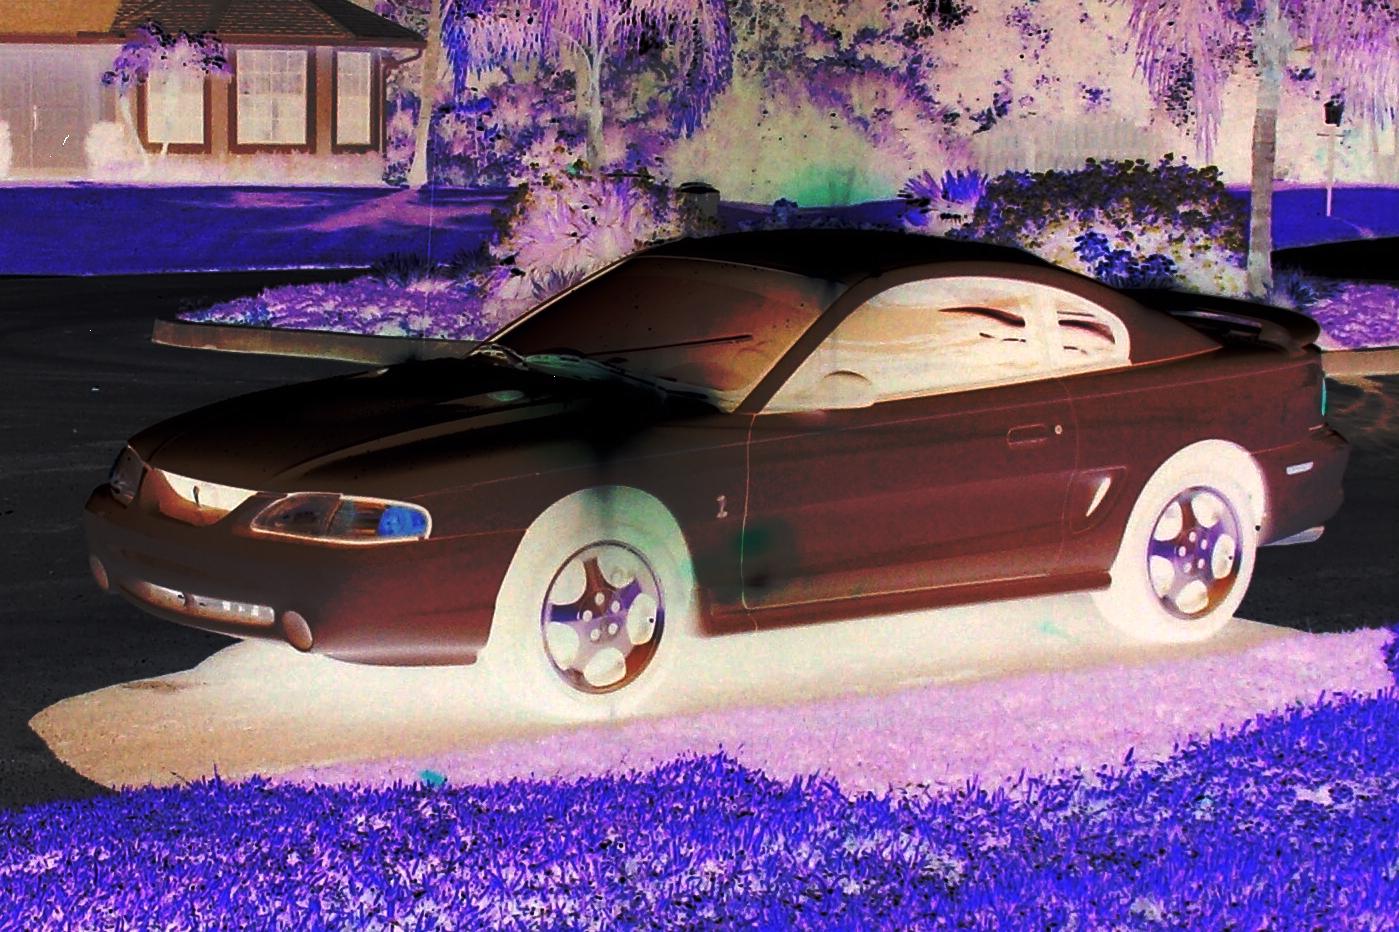  1996 Ford Mustang Cobra (stock)